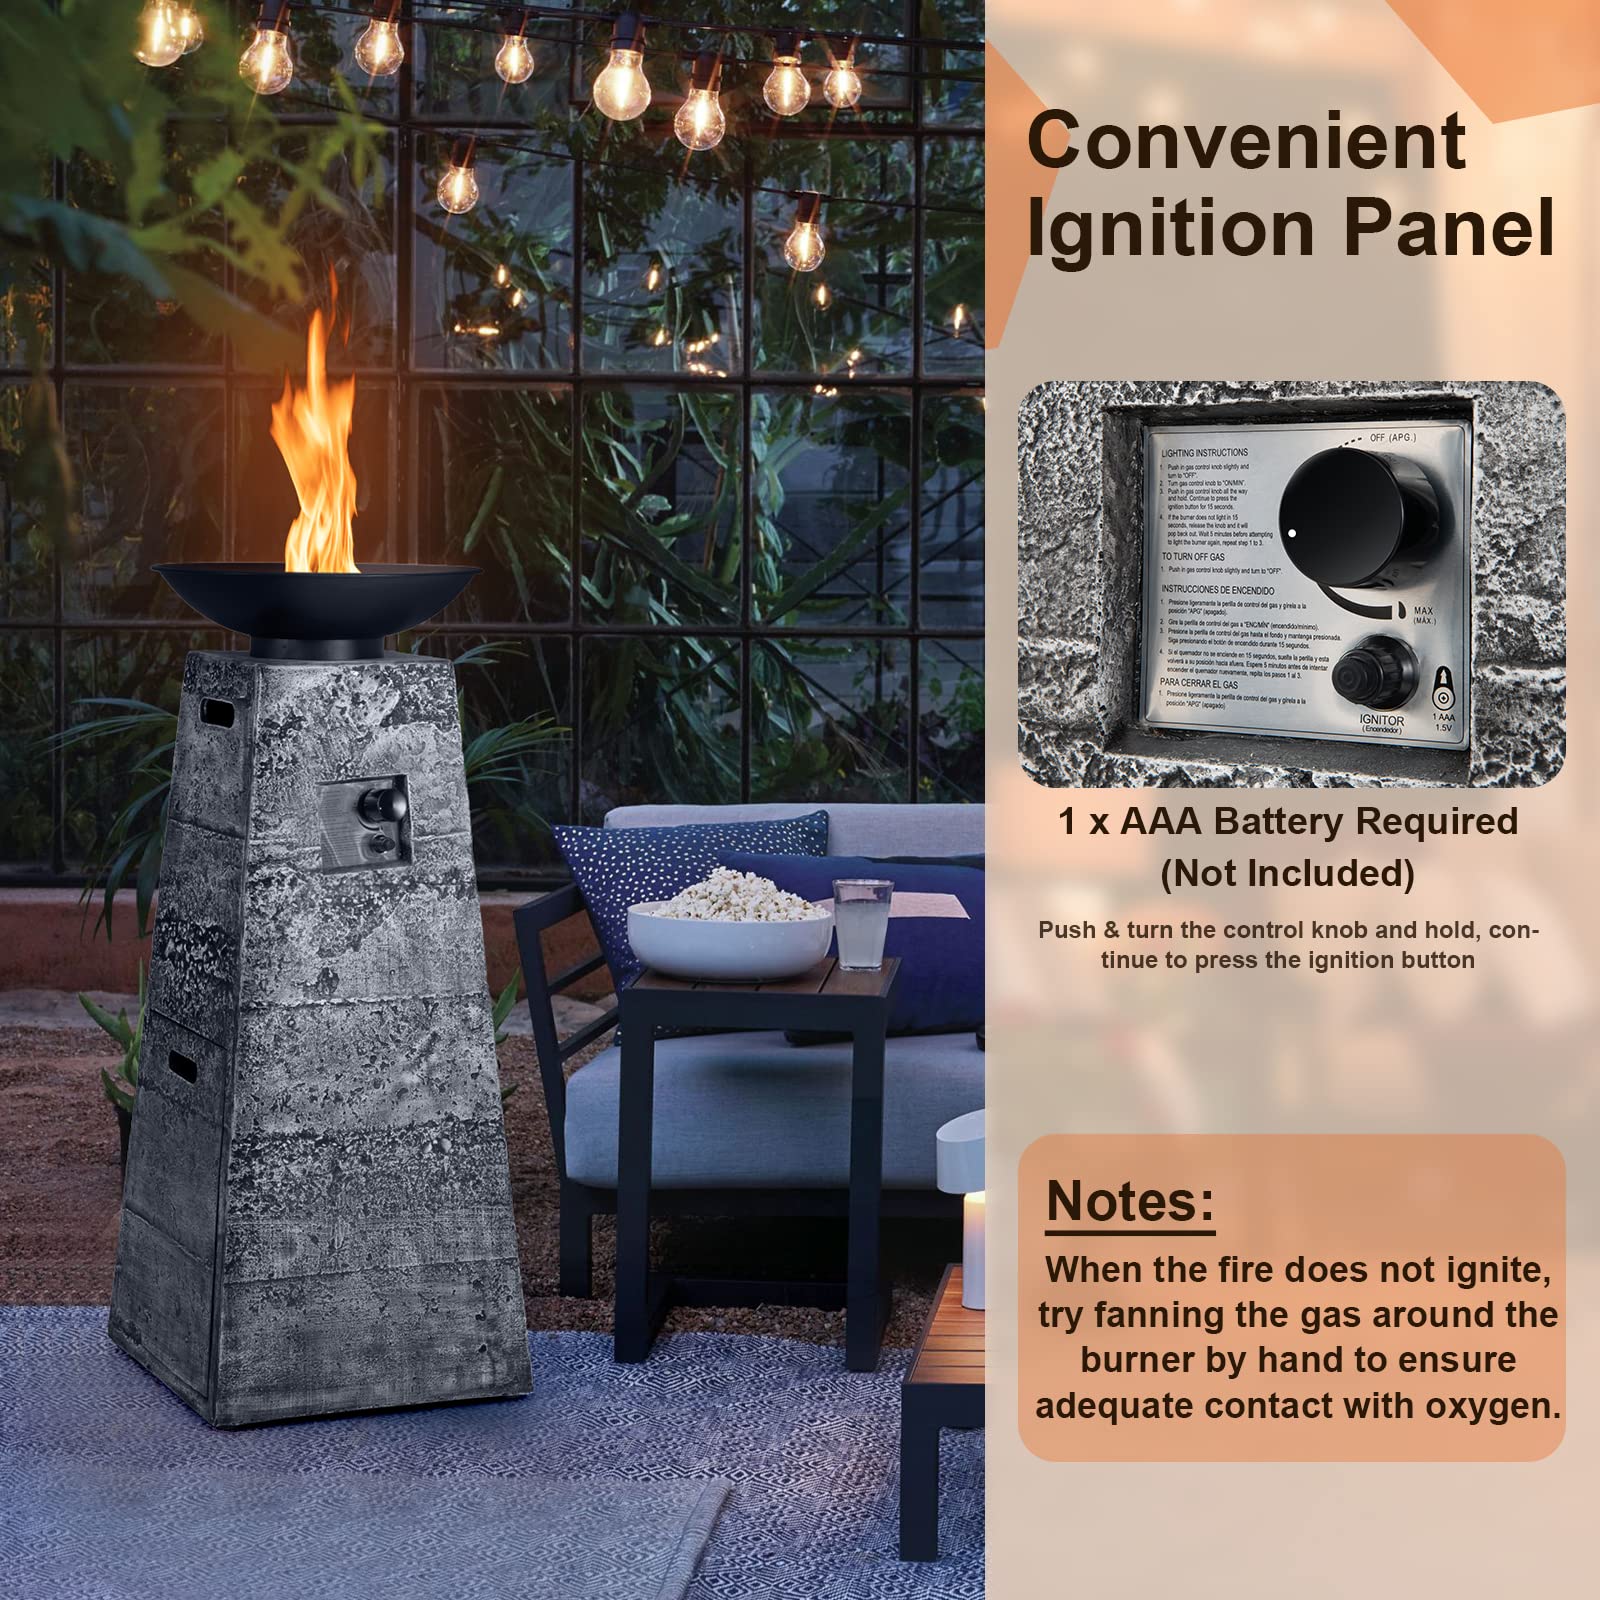 Giantex Outdoor Propane Fire Pit - 48 Inch Propane Fire Bowl Column with Lava Rocks & PVC Cover, 30,000 BTU Heat Output